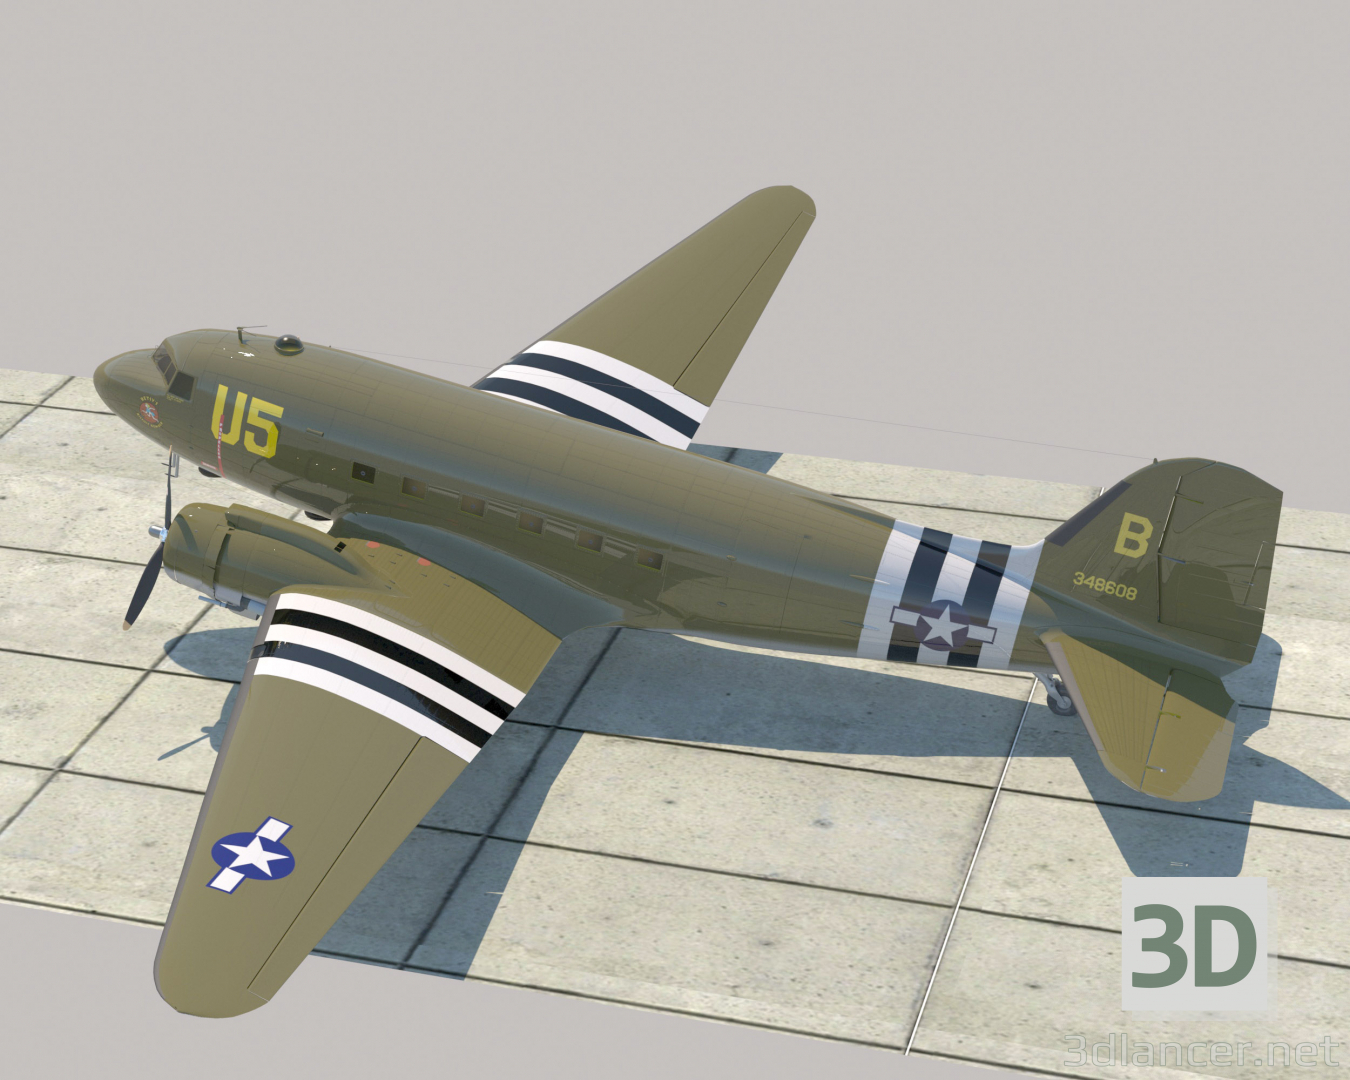 C-47 "Skytrain" 3D-Modell kaufen - Rendern